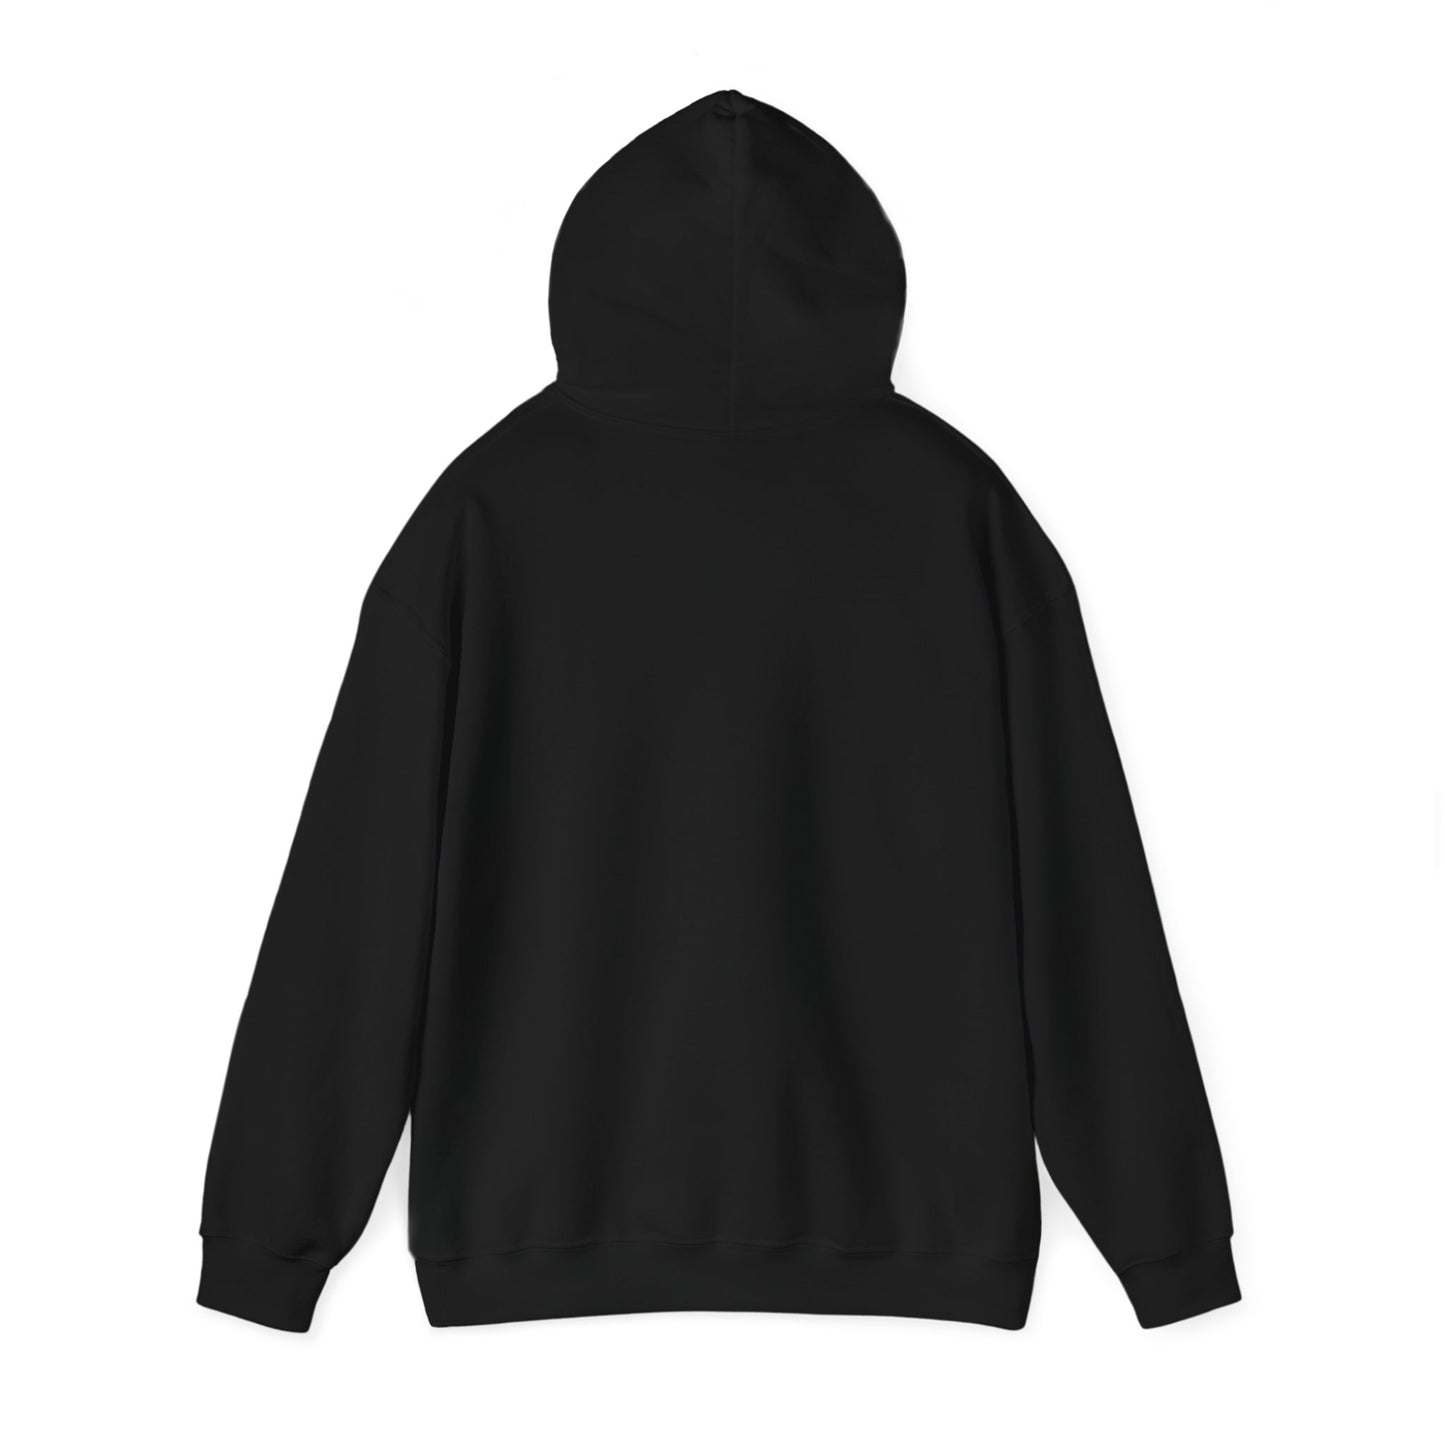 Black by Popular Demand Hooded Sweatshirt